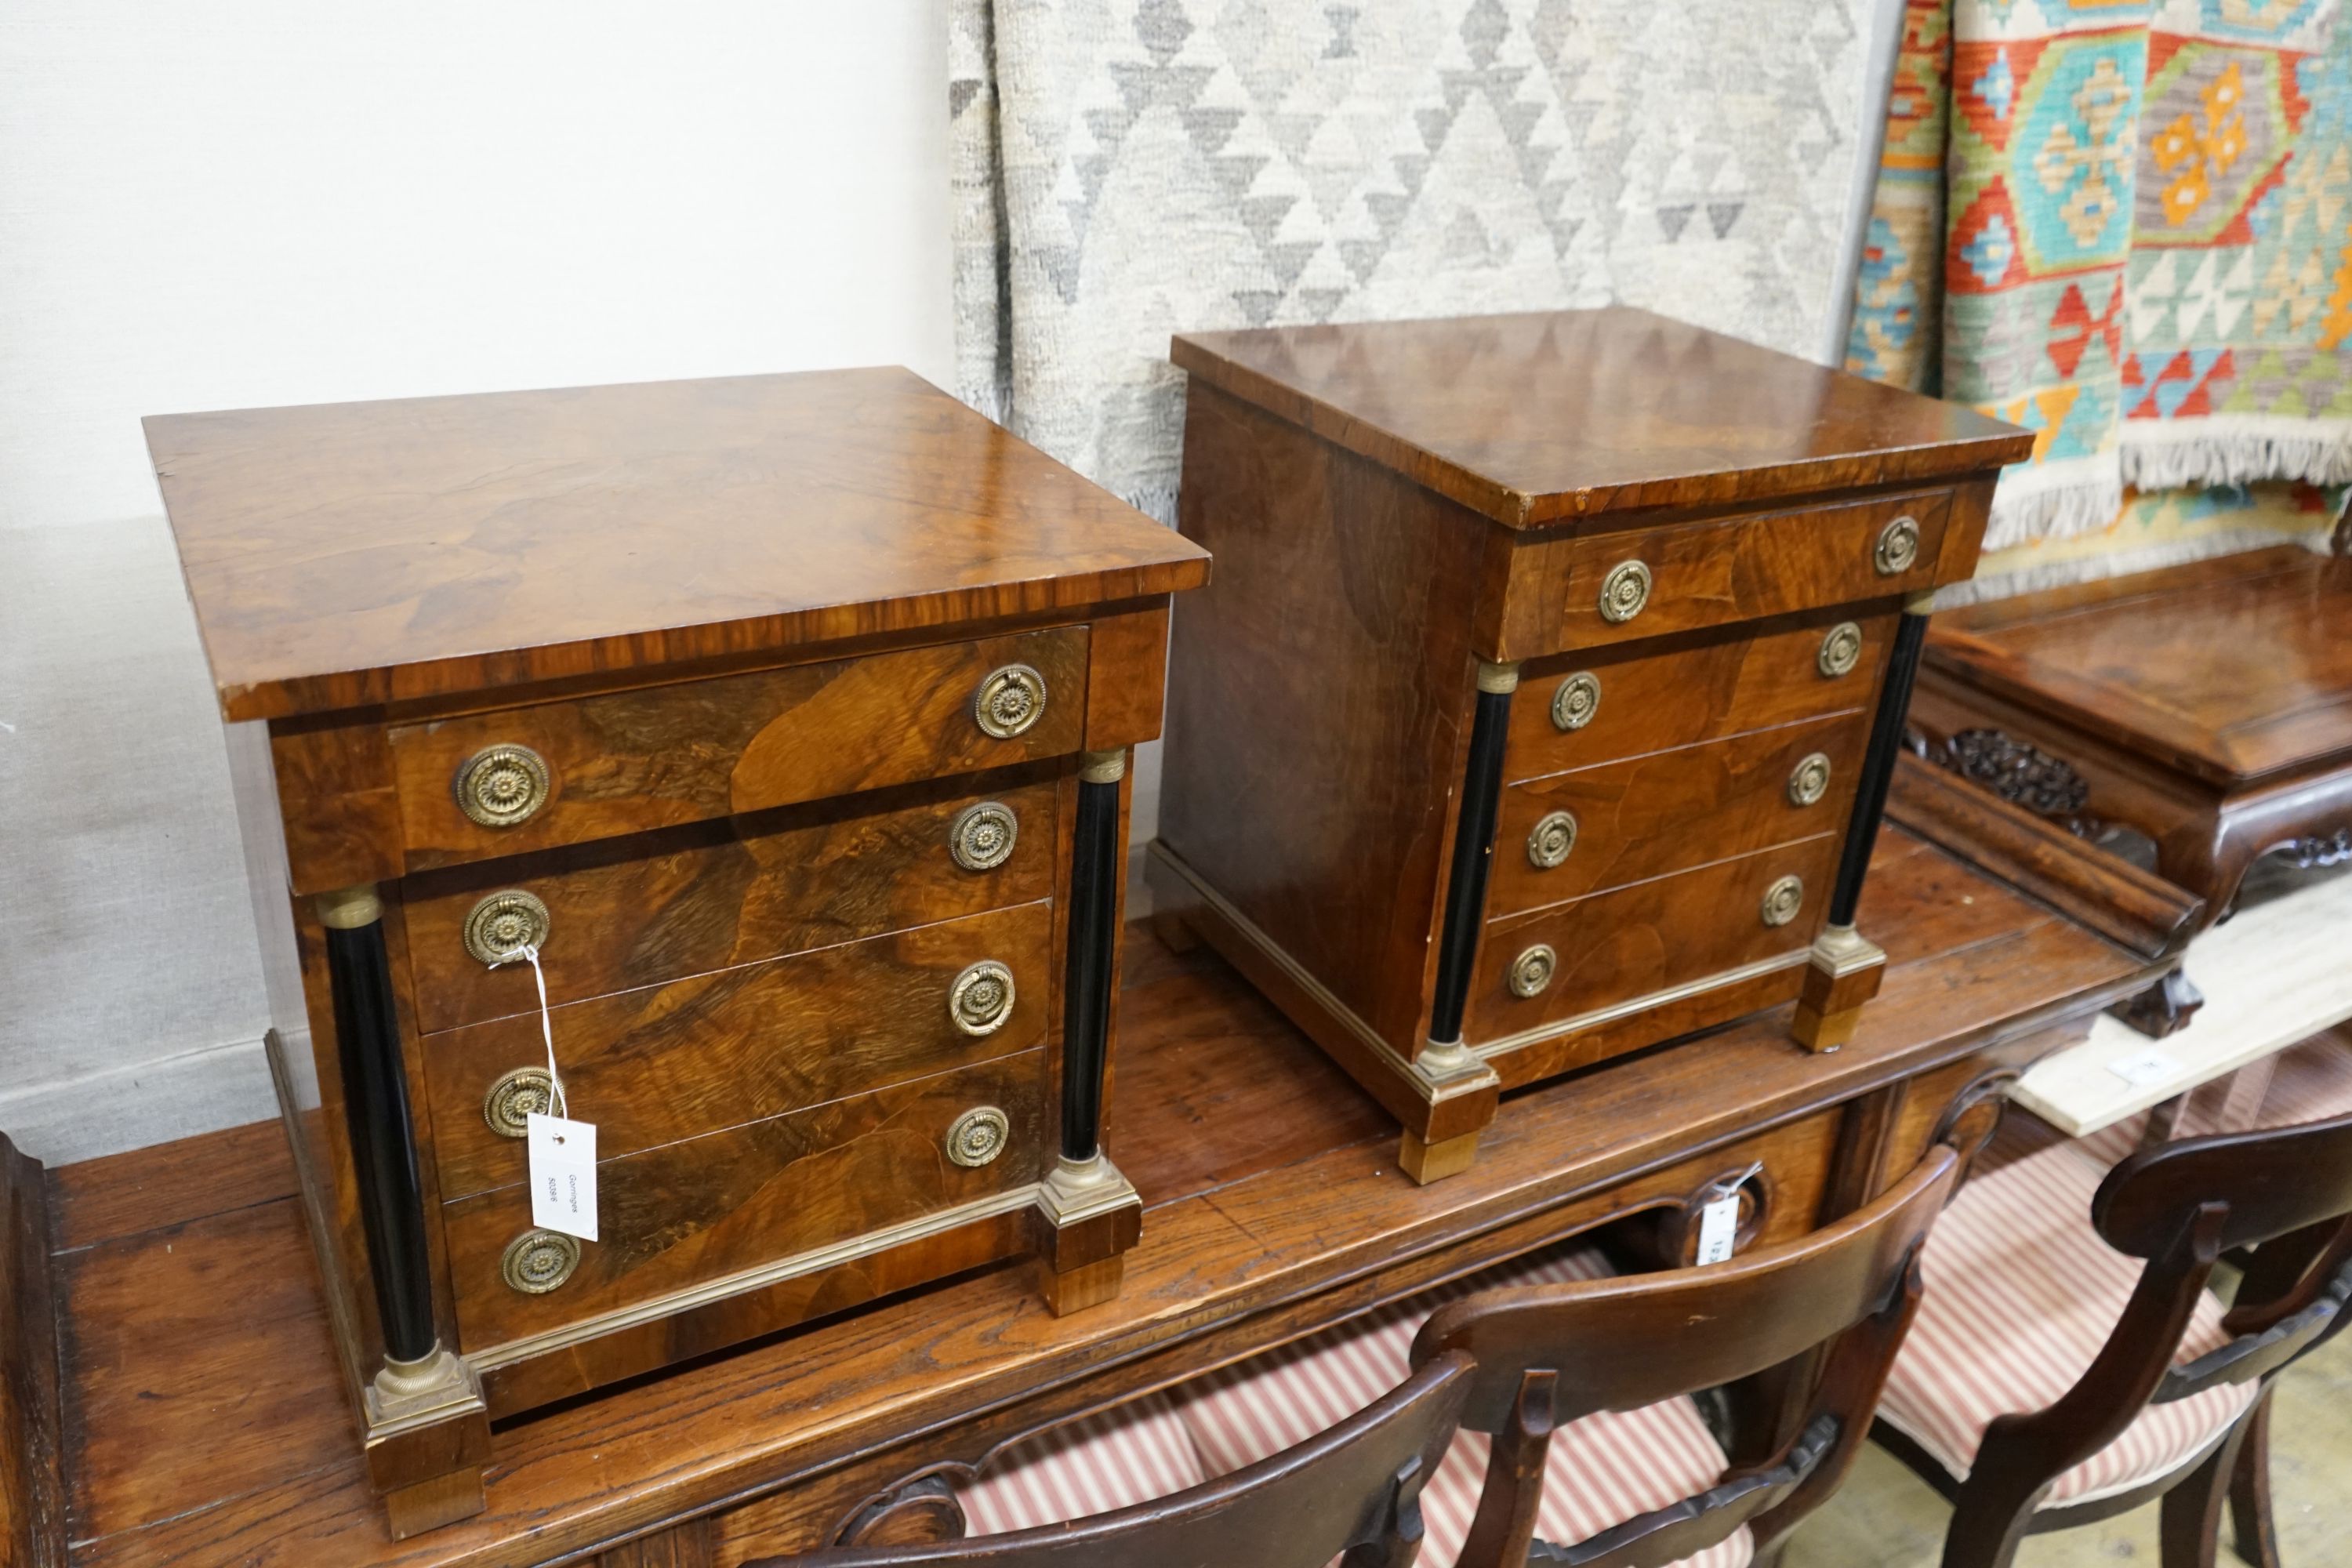 A pair of Biedermeier style walnut four drawer bedside chests, width 45cm, depth 40cm, height 48cm